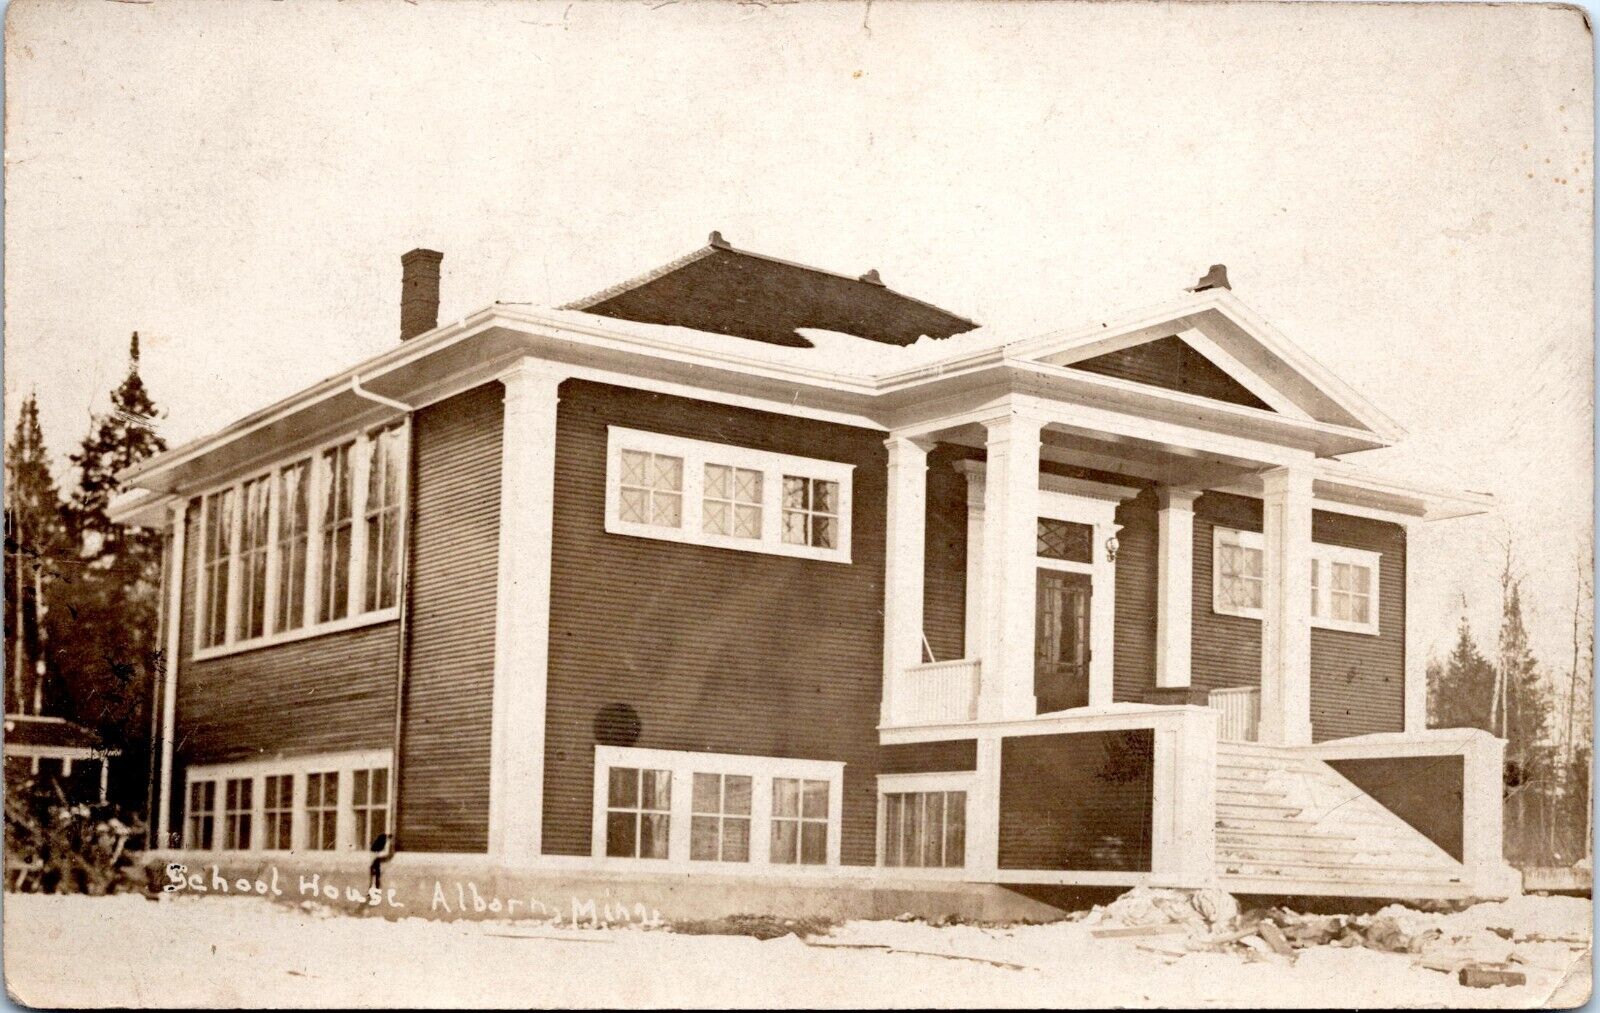 RPPC School House, Alborn, Minnesota - Real Photo Postcard c1910s